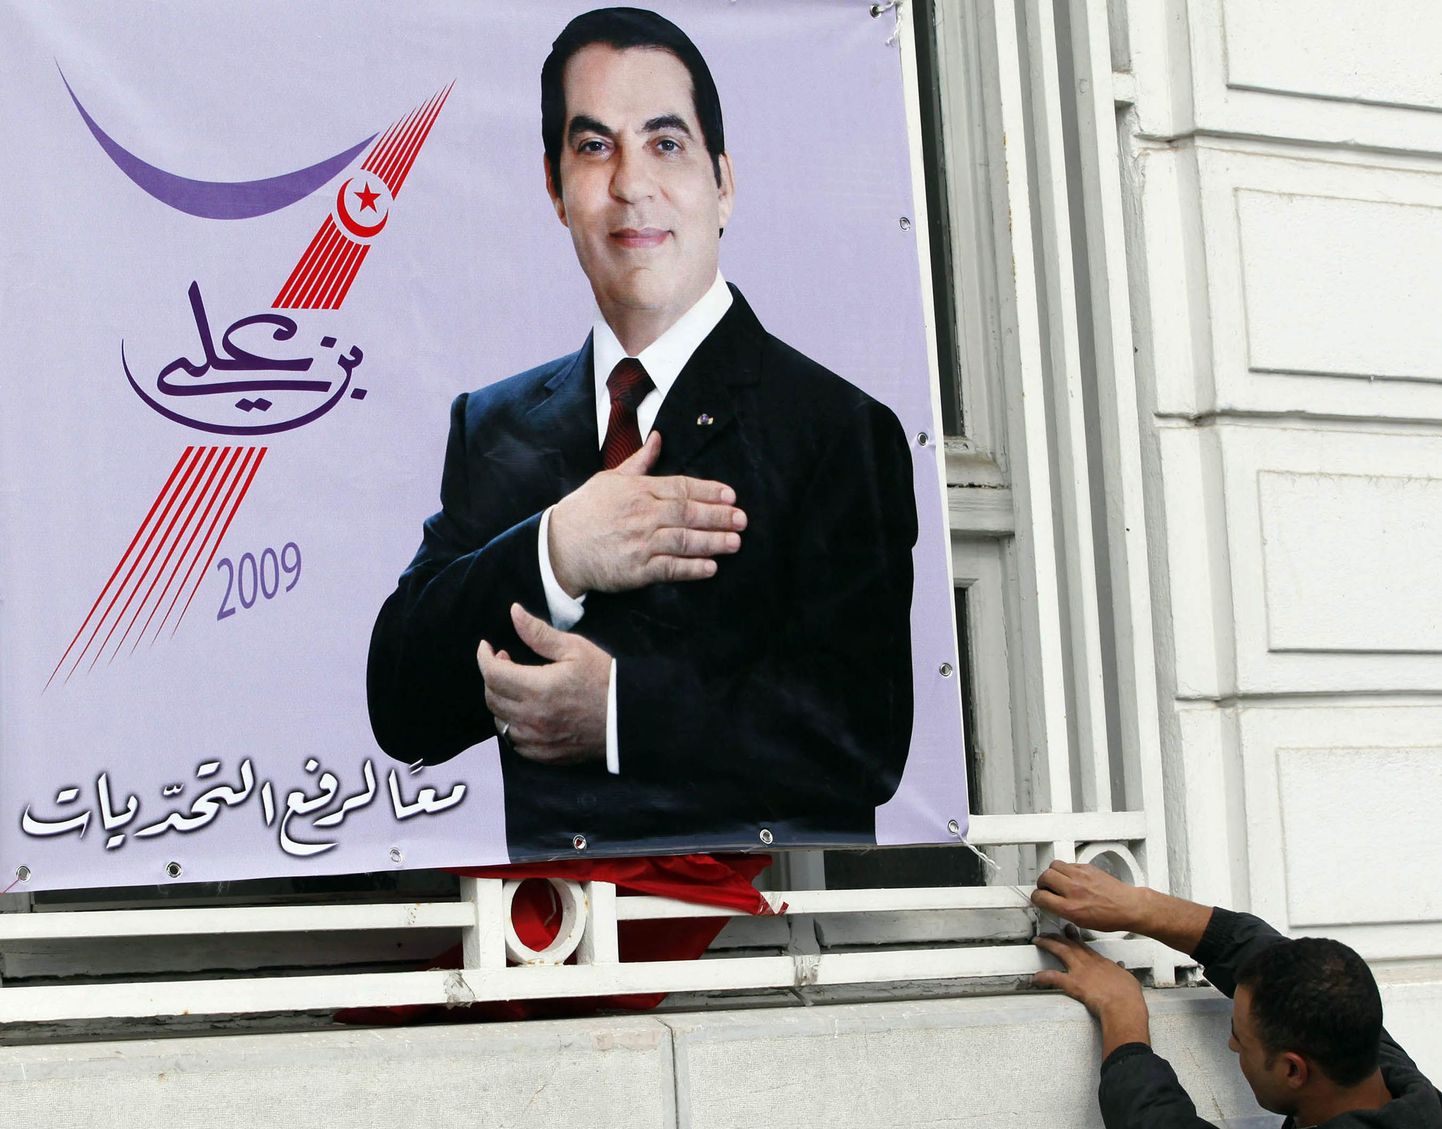 President Zine al-Abidine Ben Ali pildiga plakat pealinnas Tunises.